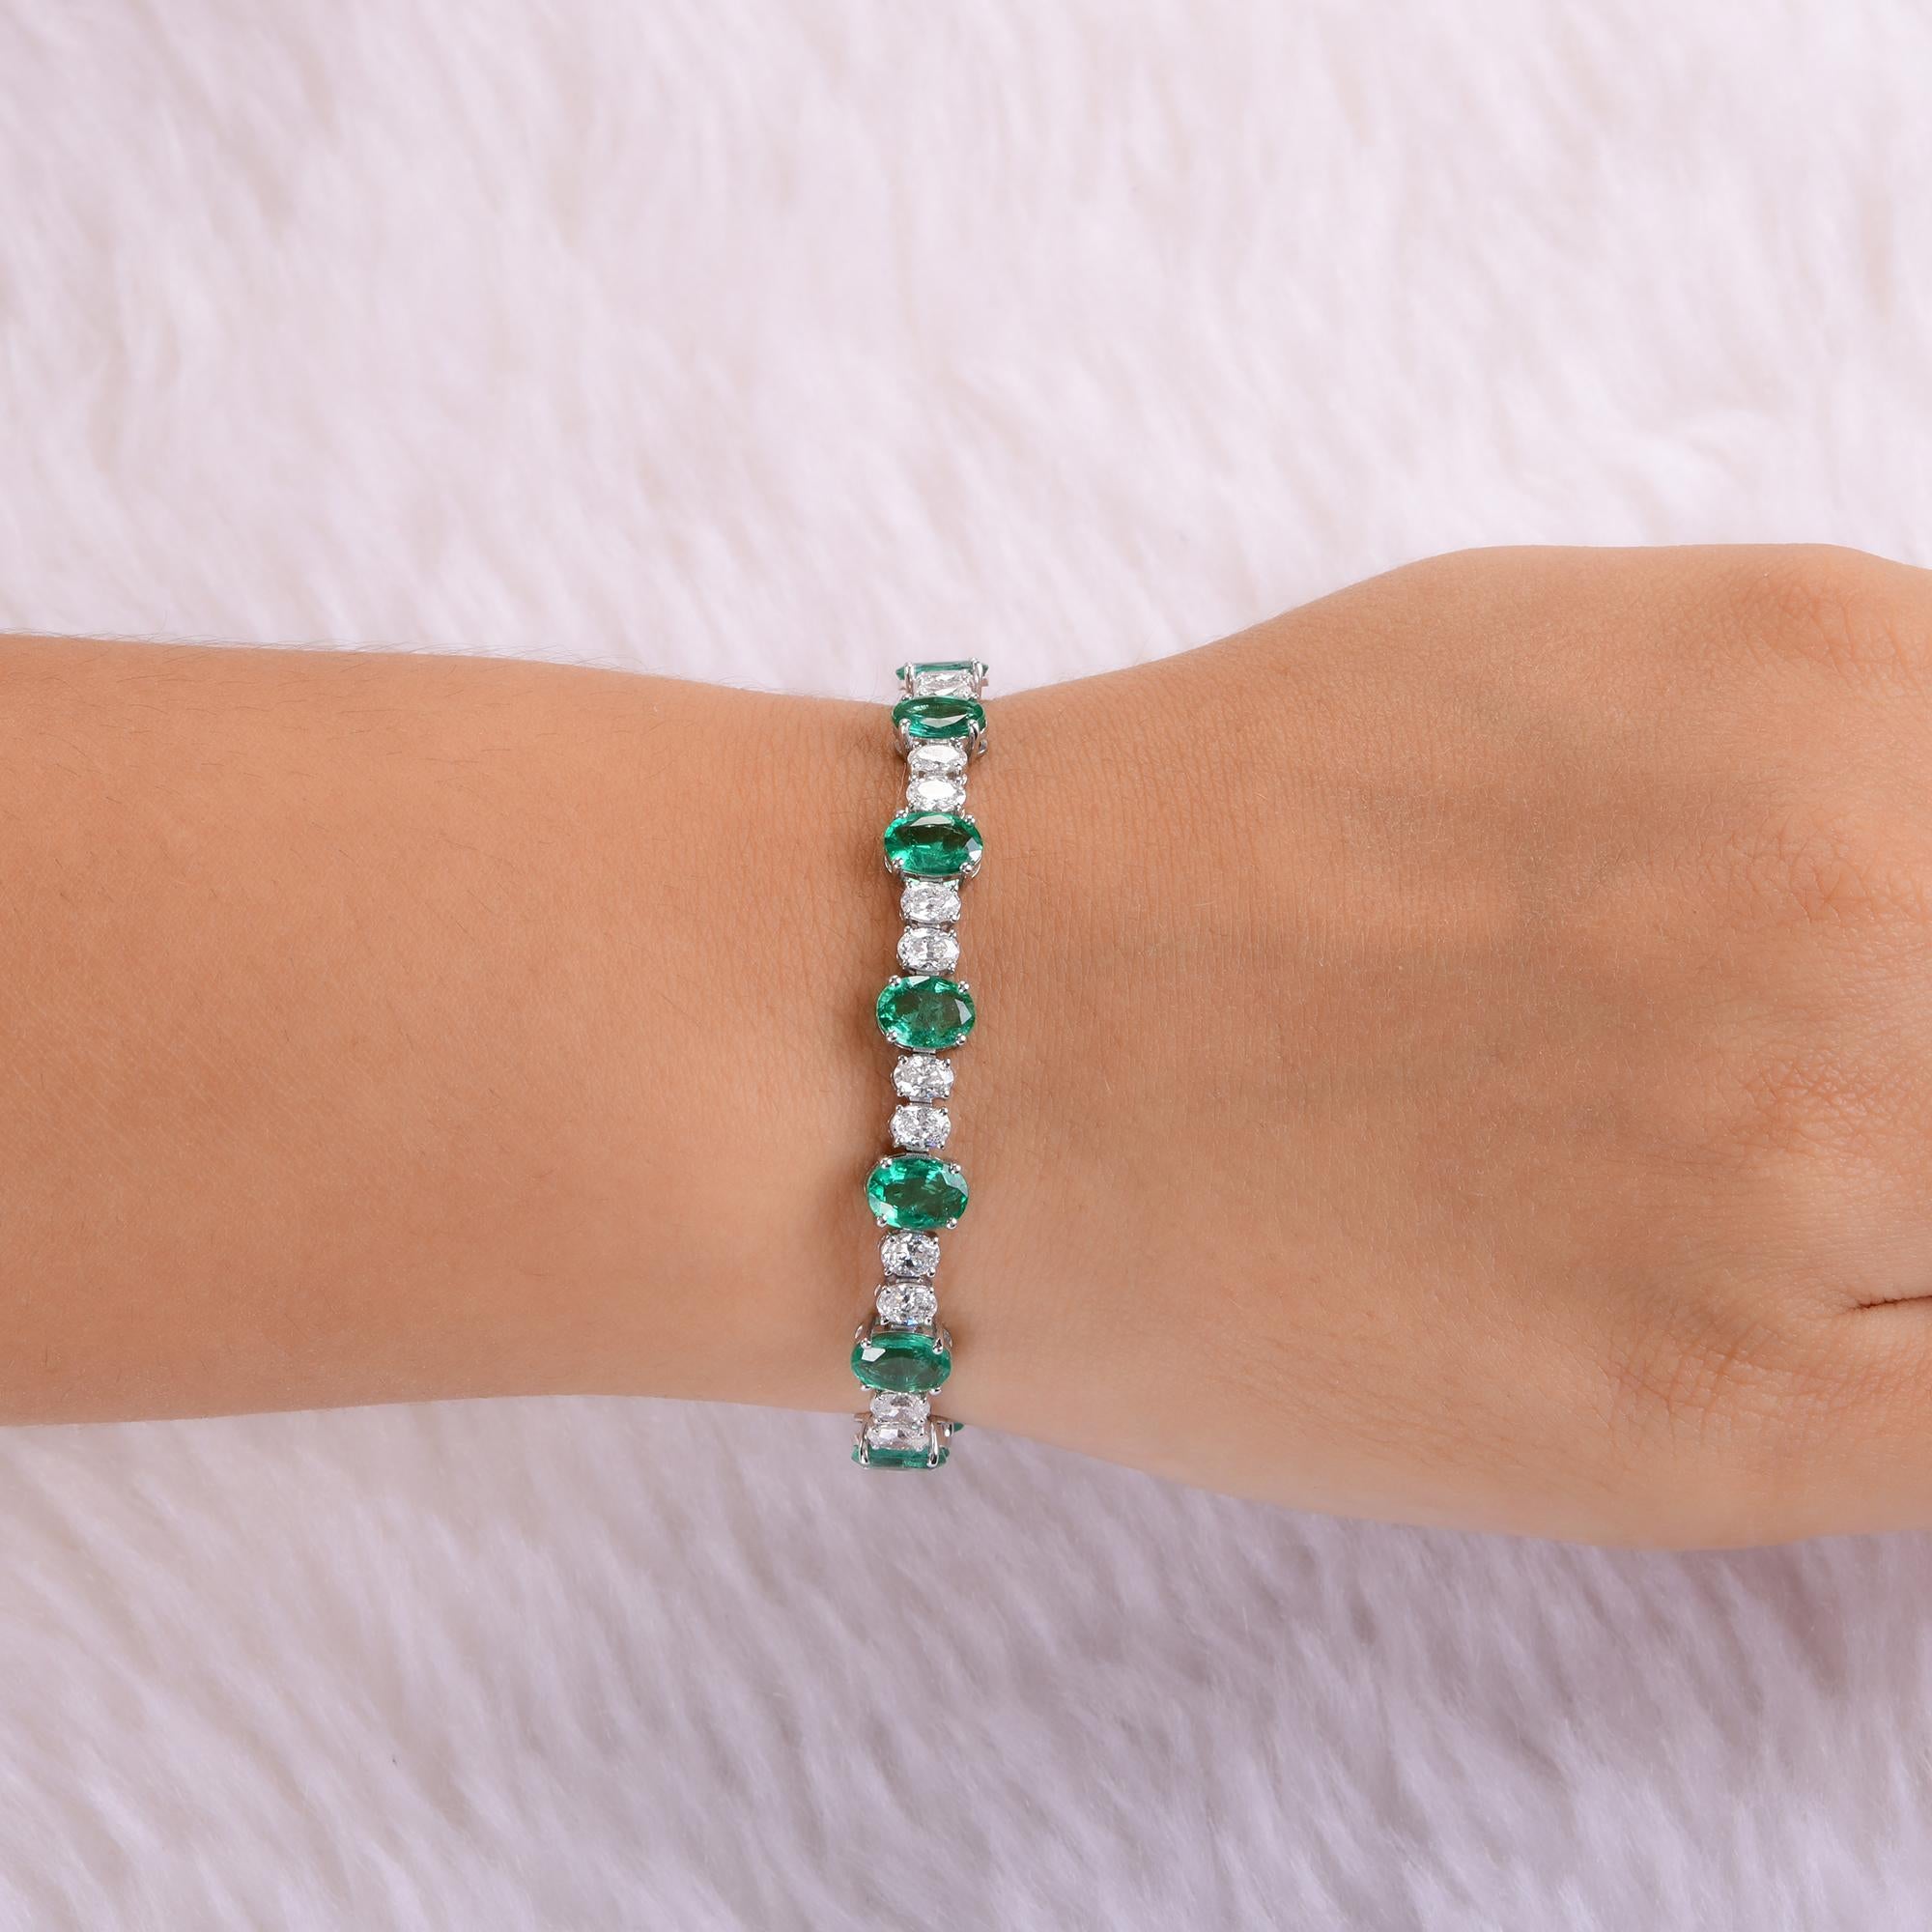 Oval Cut Zambian Emerald Gemstone Bracelet Diamond 18 Karat White Gold Handmade Jewelry For Sale